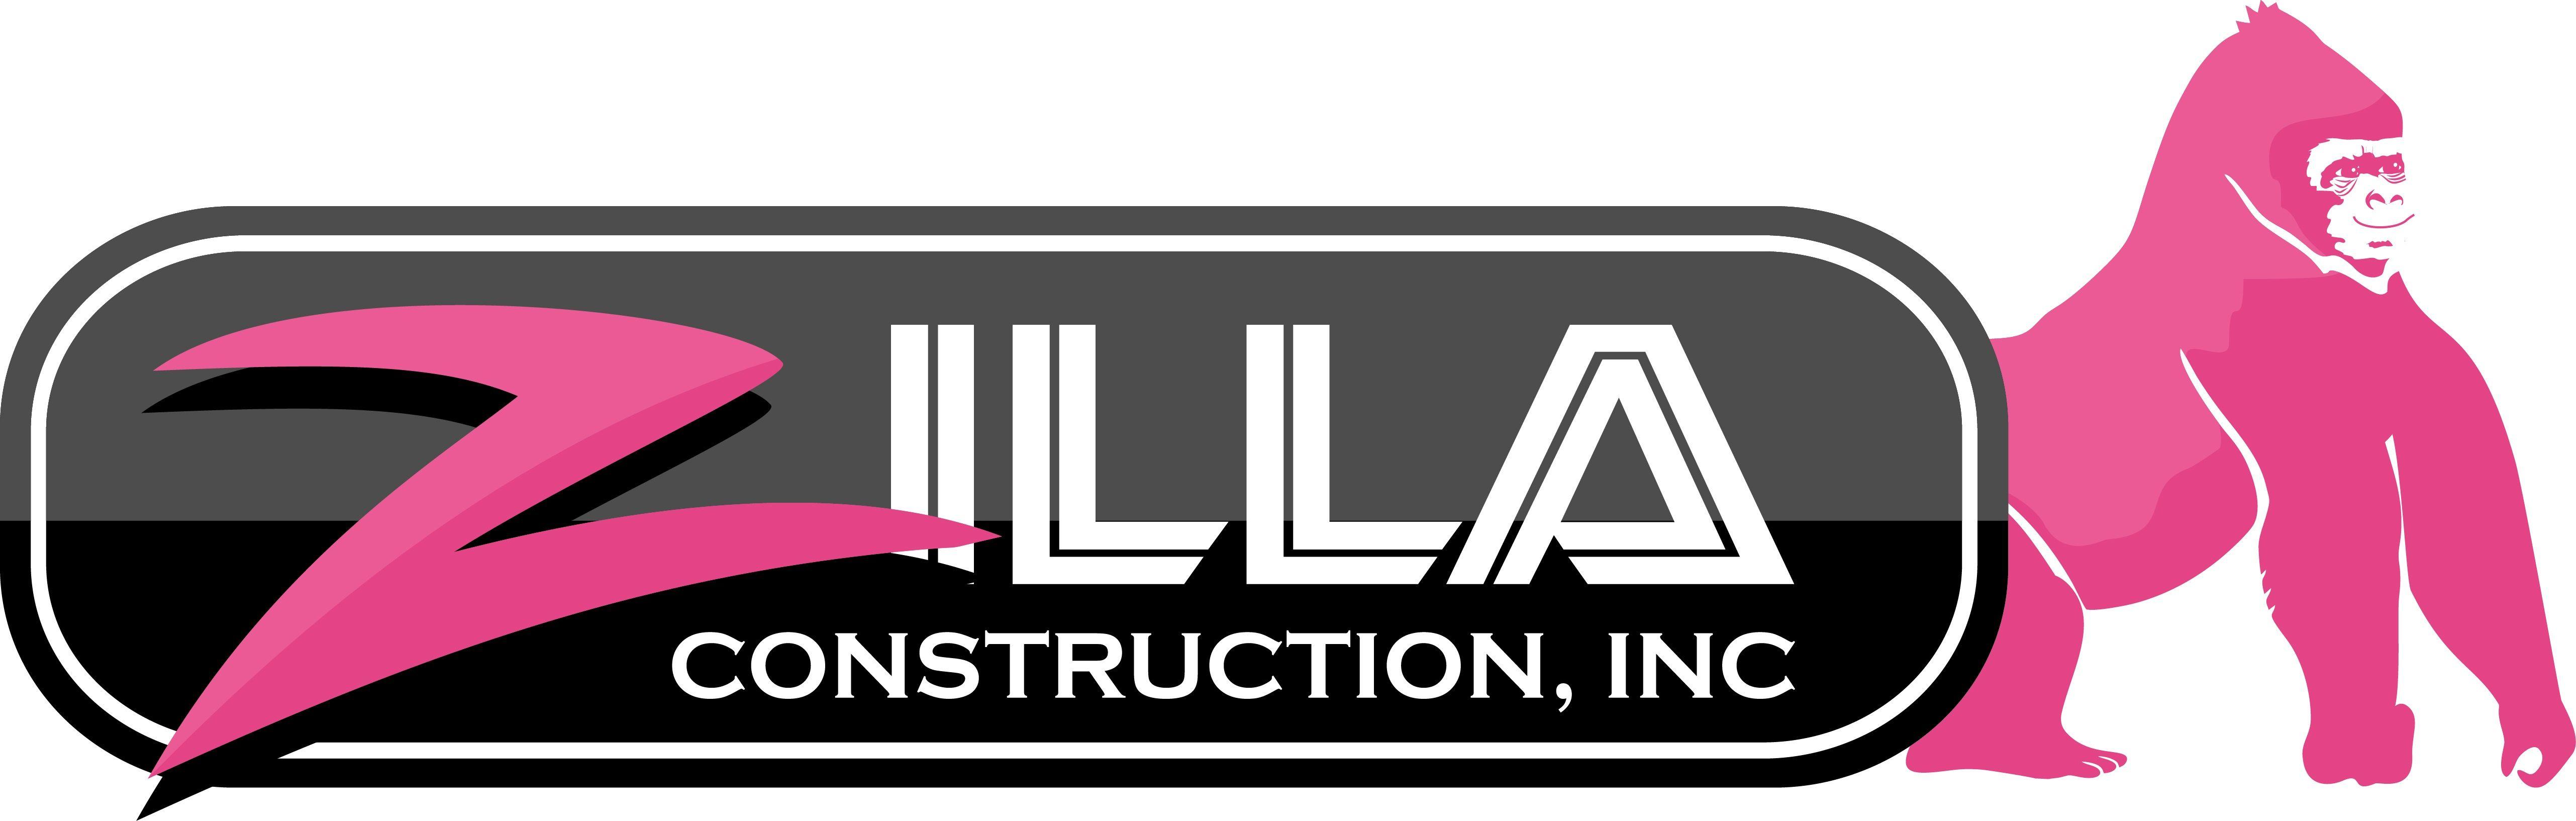 Zilla Logo - Zilla Construction